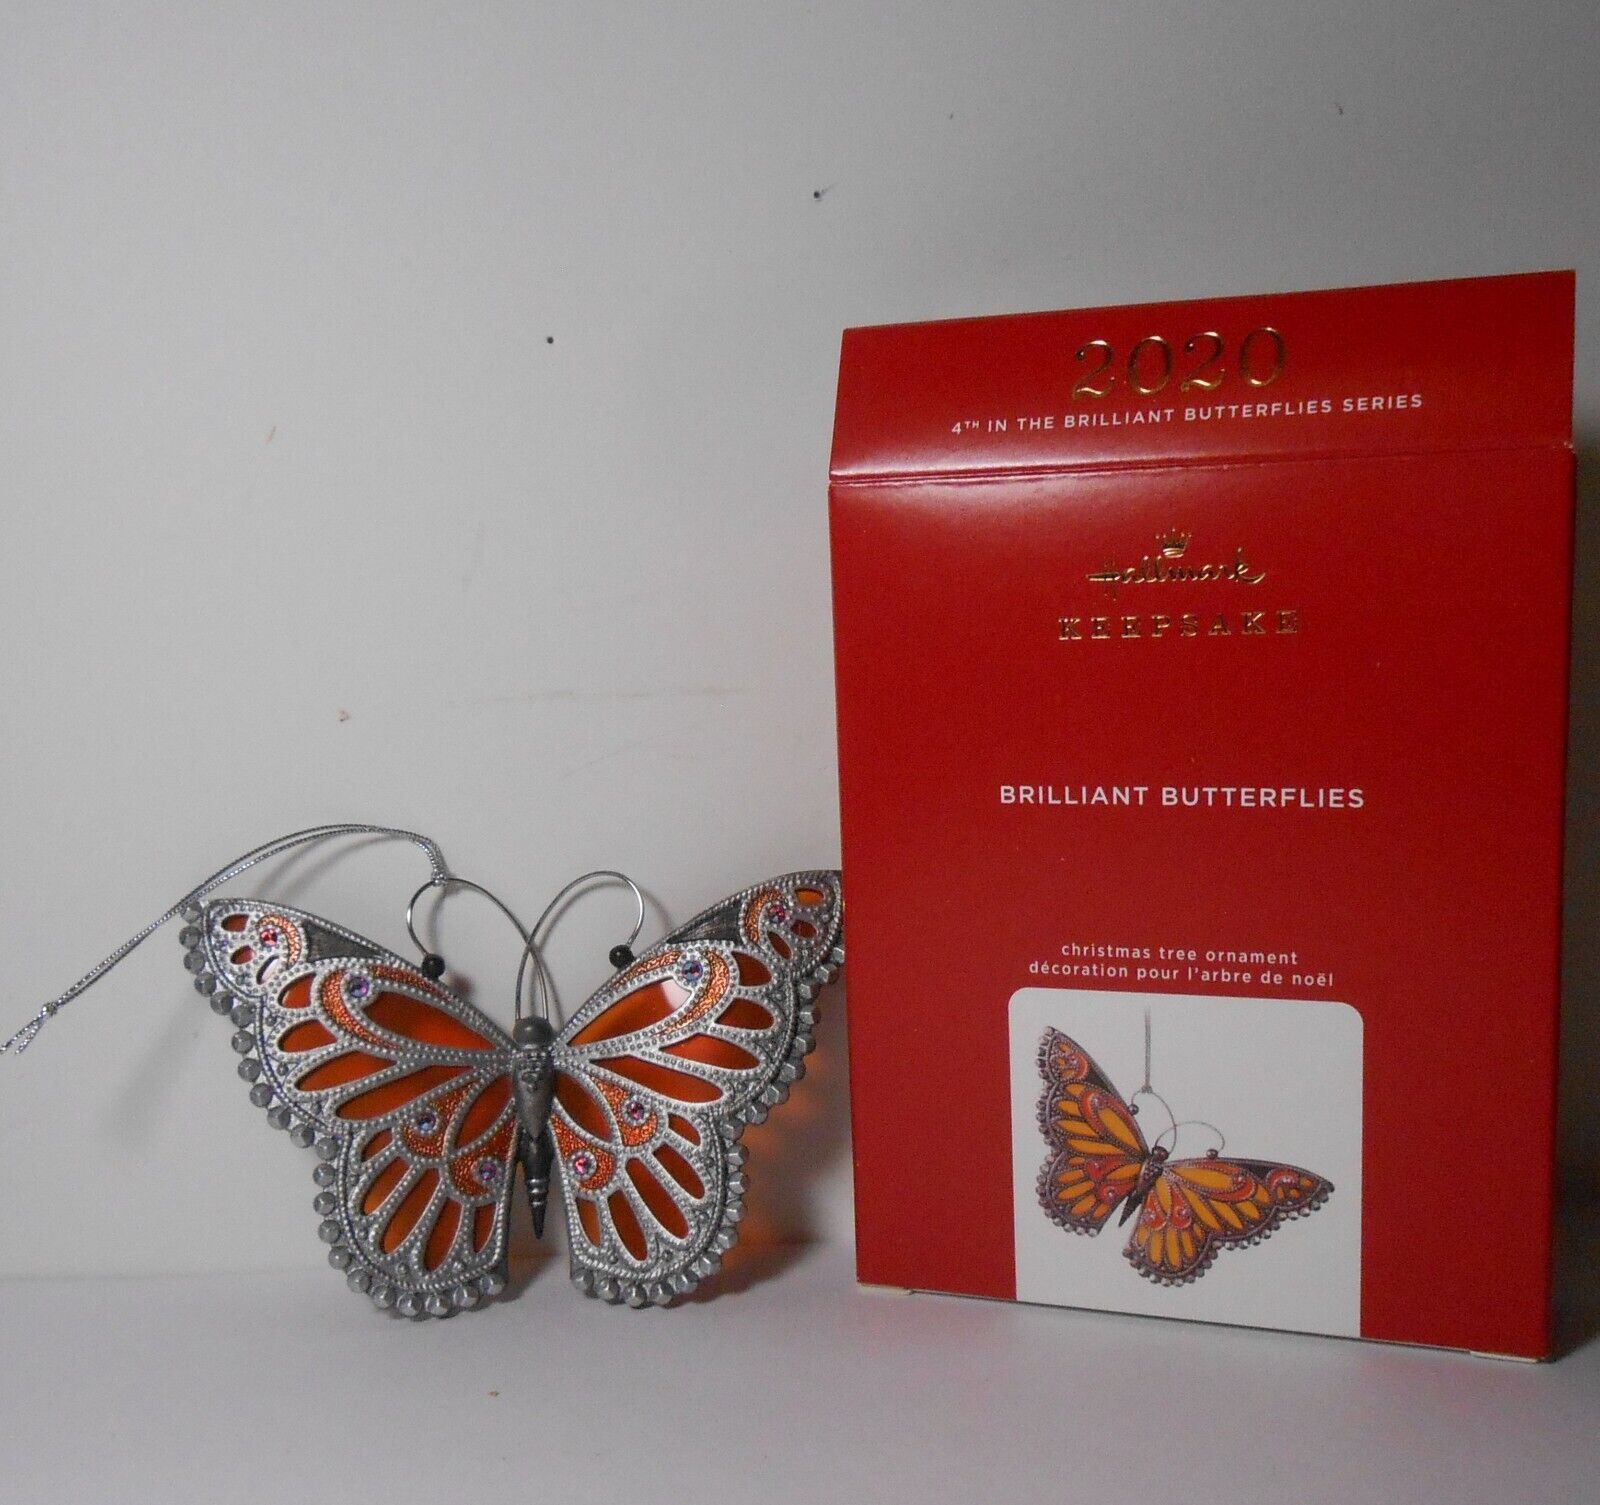 2020 Hallmark Christmas Ornament Brilliant Butterflies 4th in Series New in Box